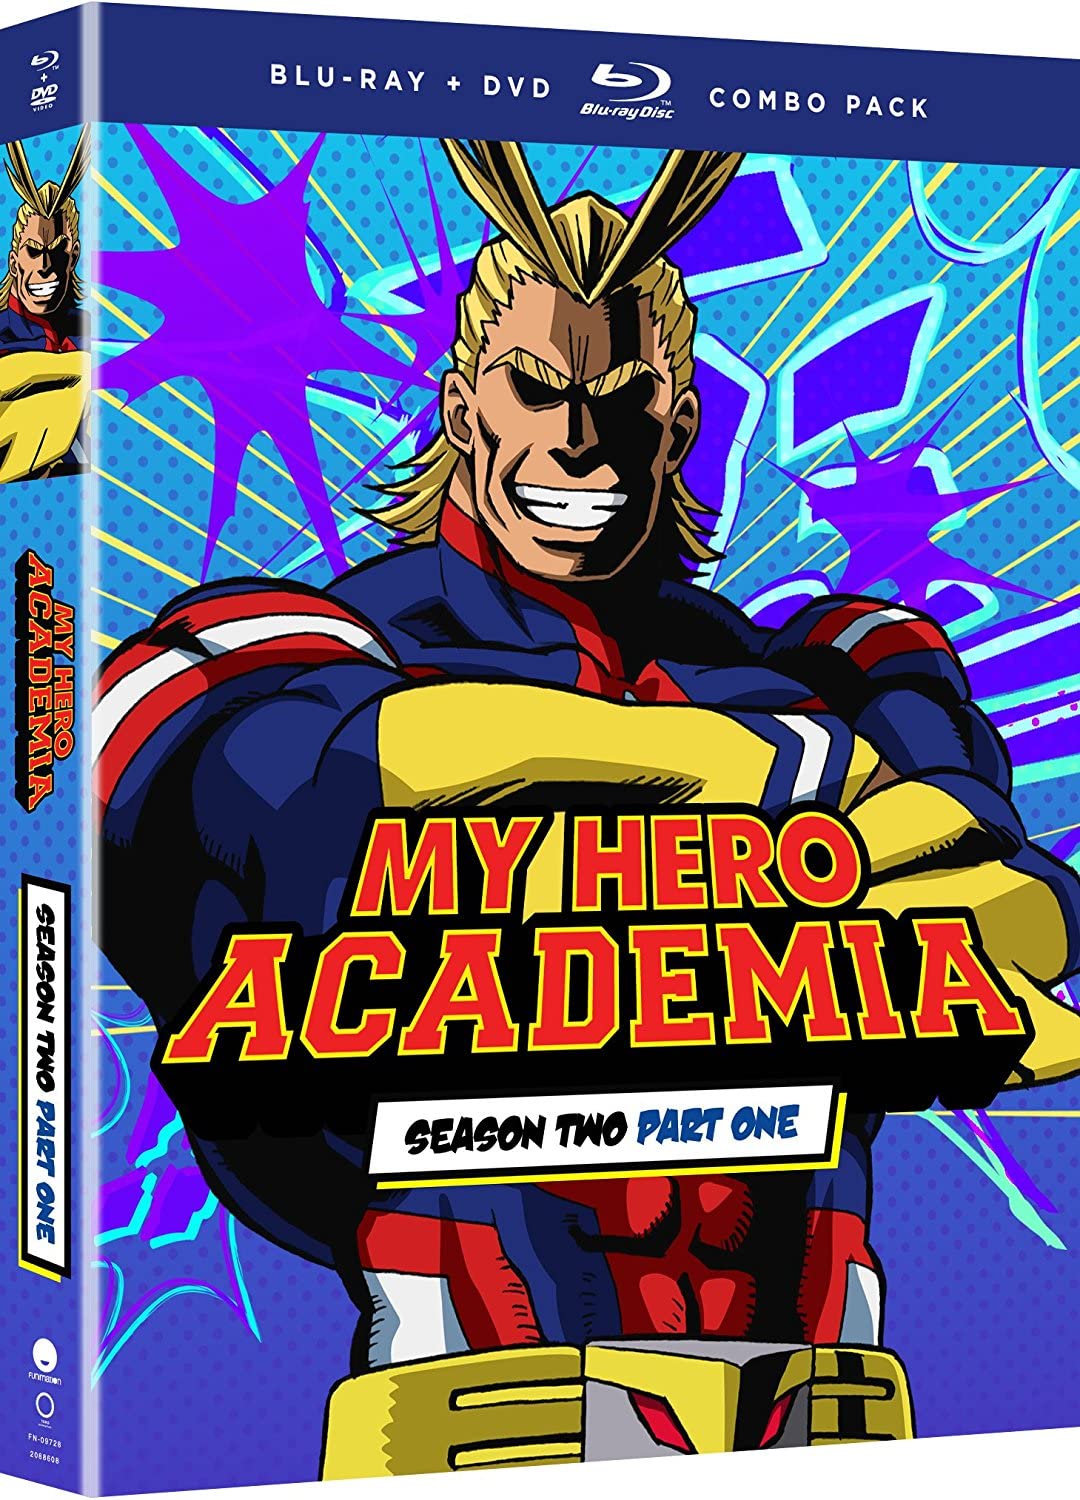 My Hero Academia Season Two Part One